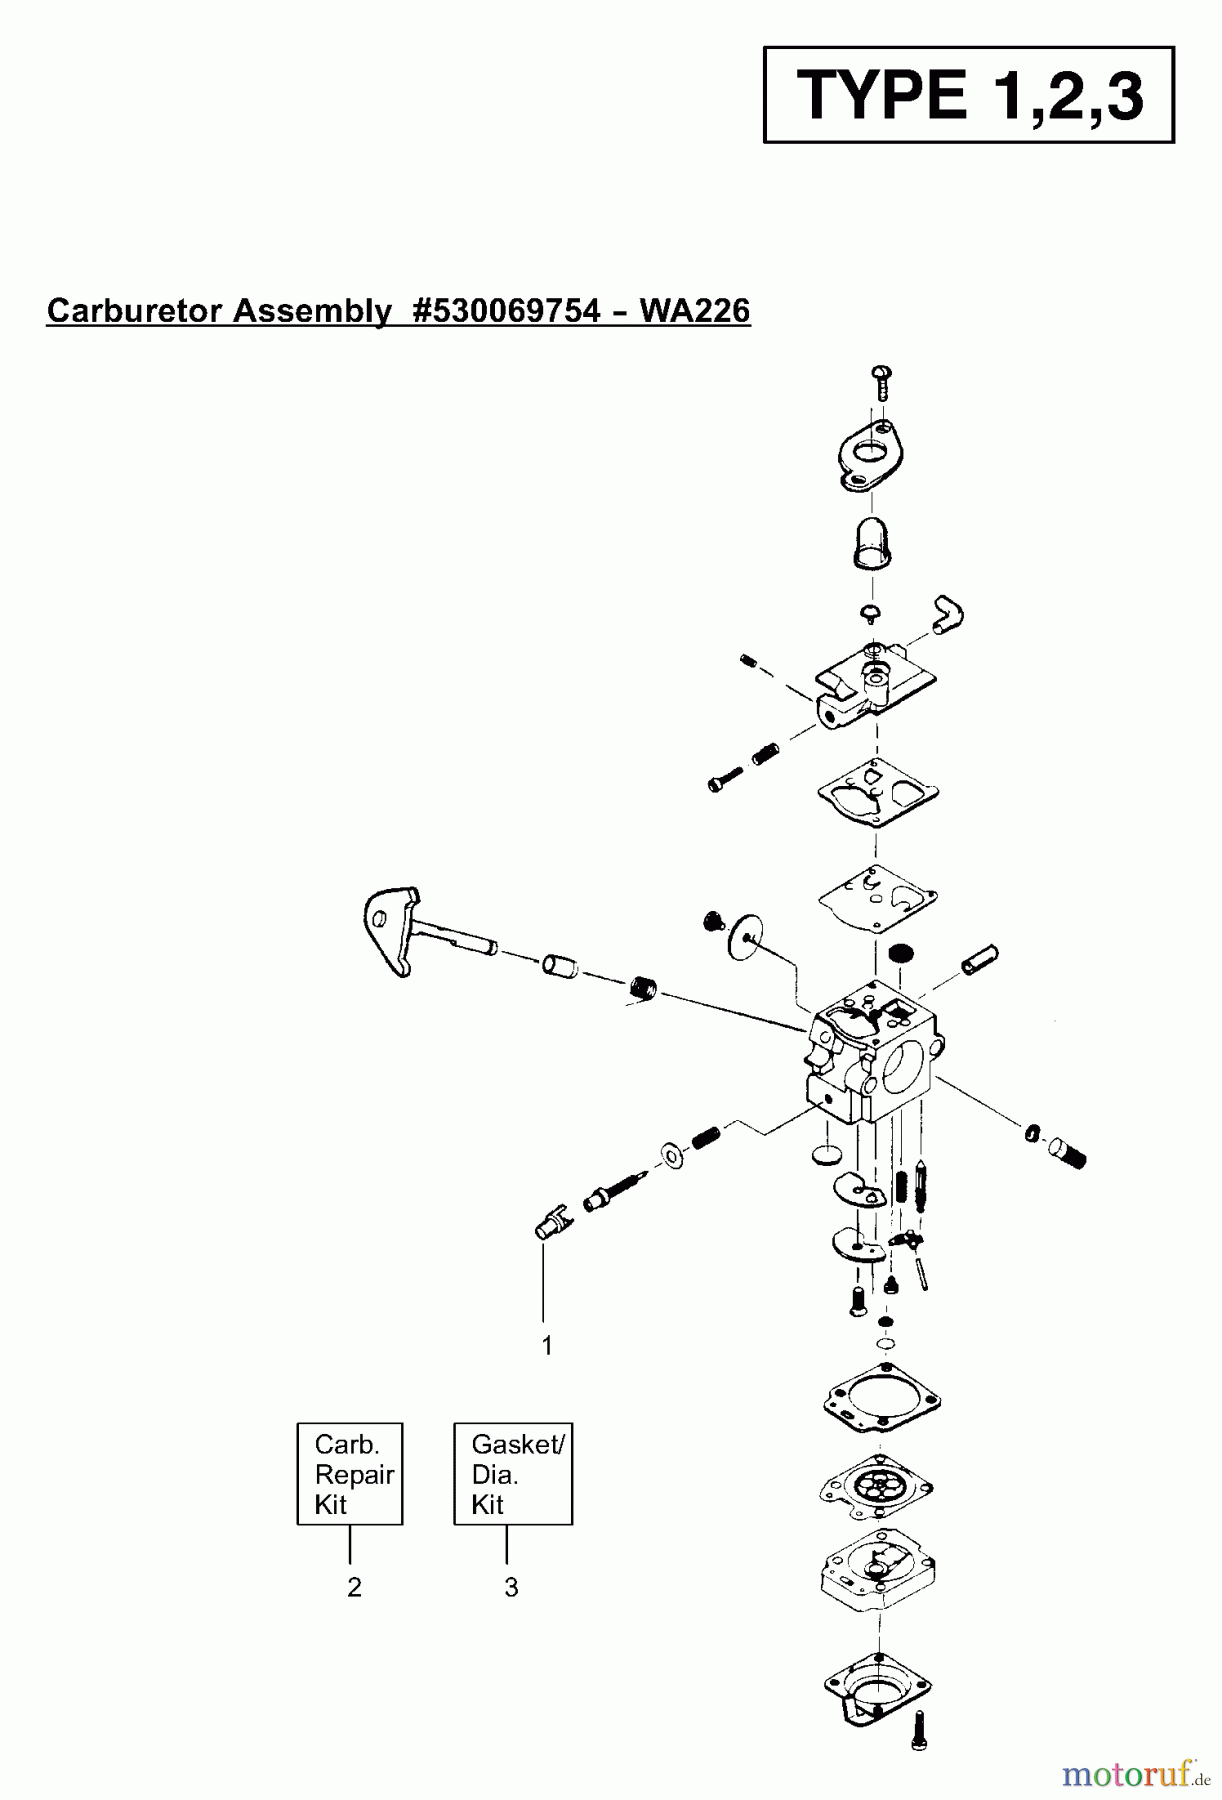  Poulan / Weed Eater Motorsensen, Trimmer Twistn Edge (Type 3) - Weed Eater String Trimmer Carburetor Assembly (WA226) P/N 530069754